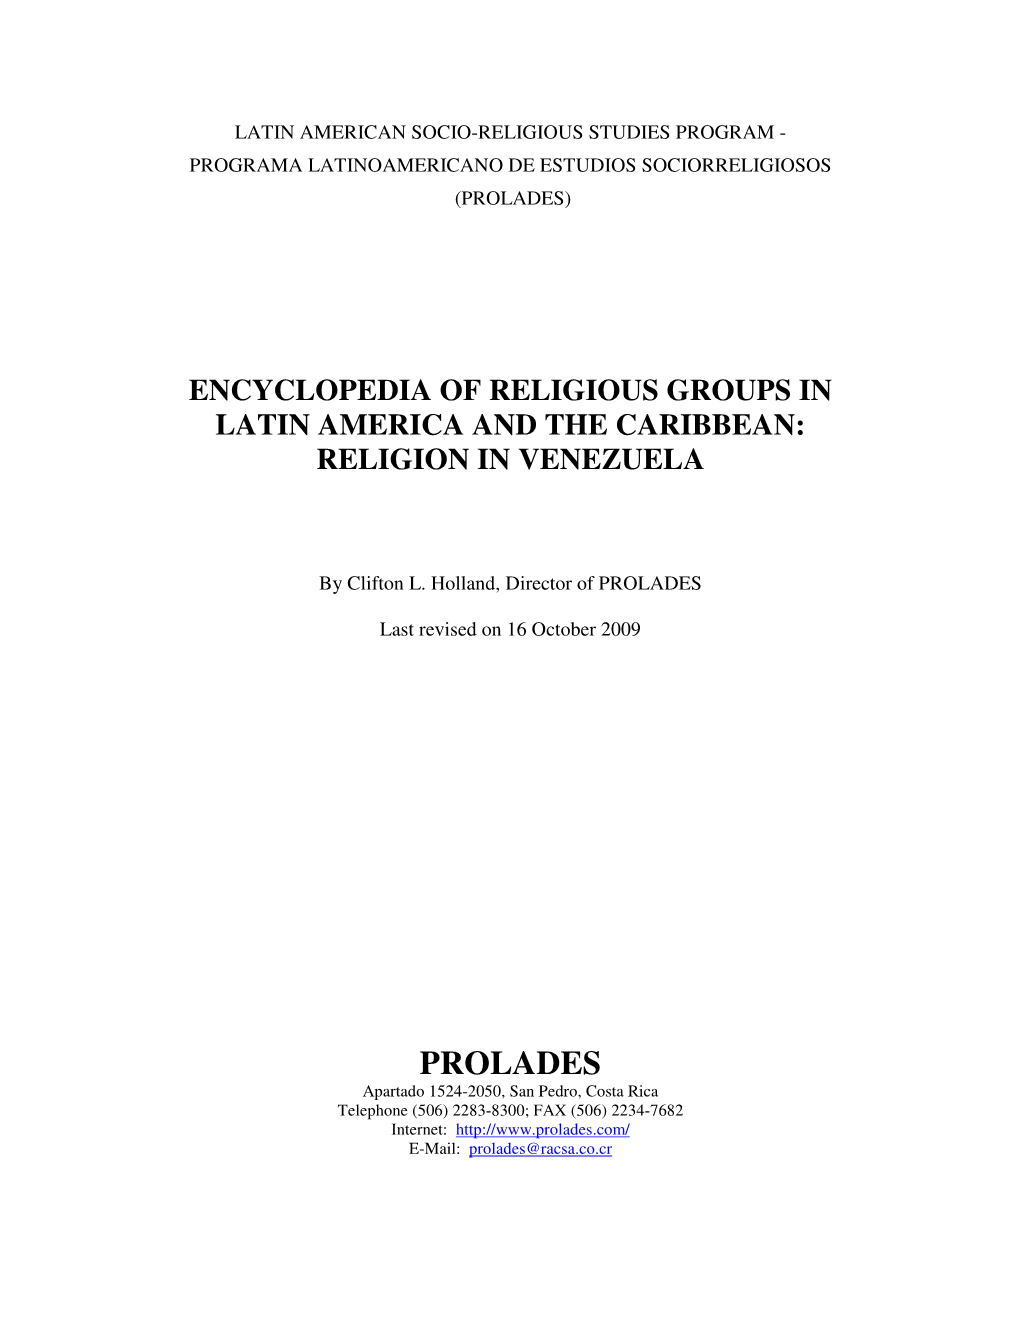 Religion in Venezuela, 2009